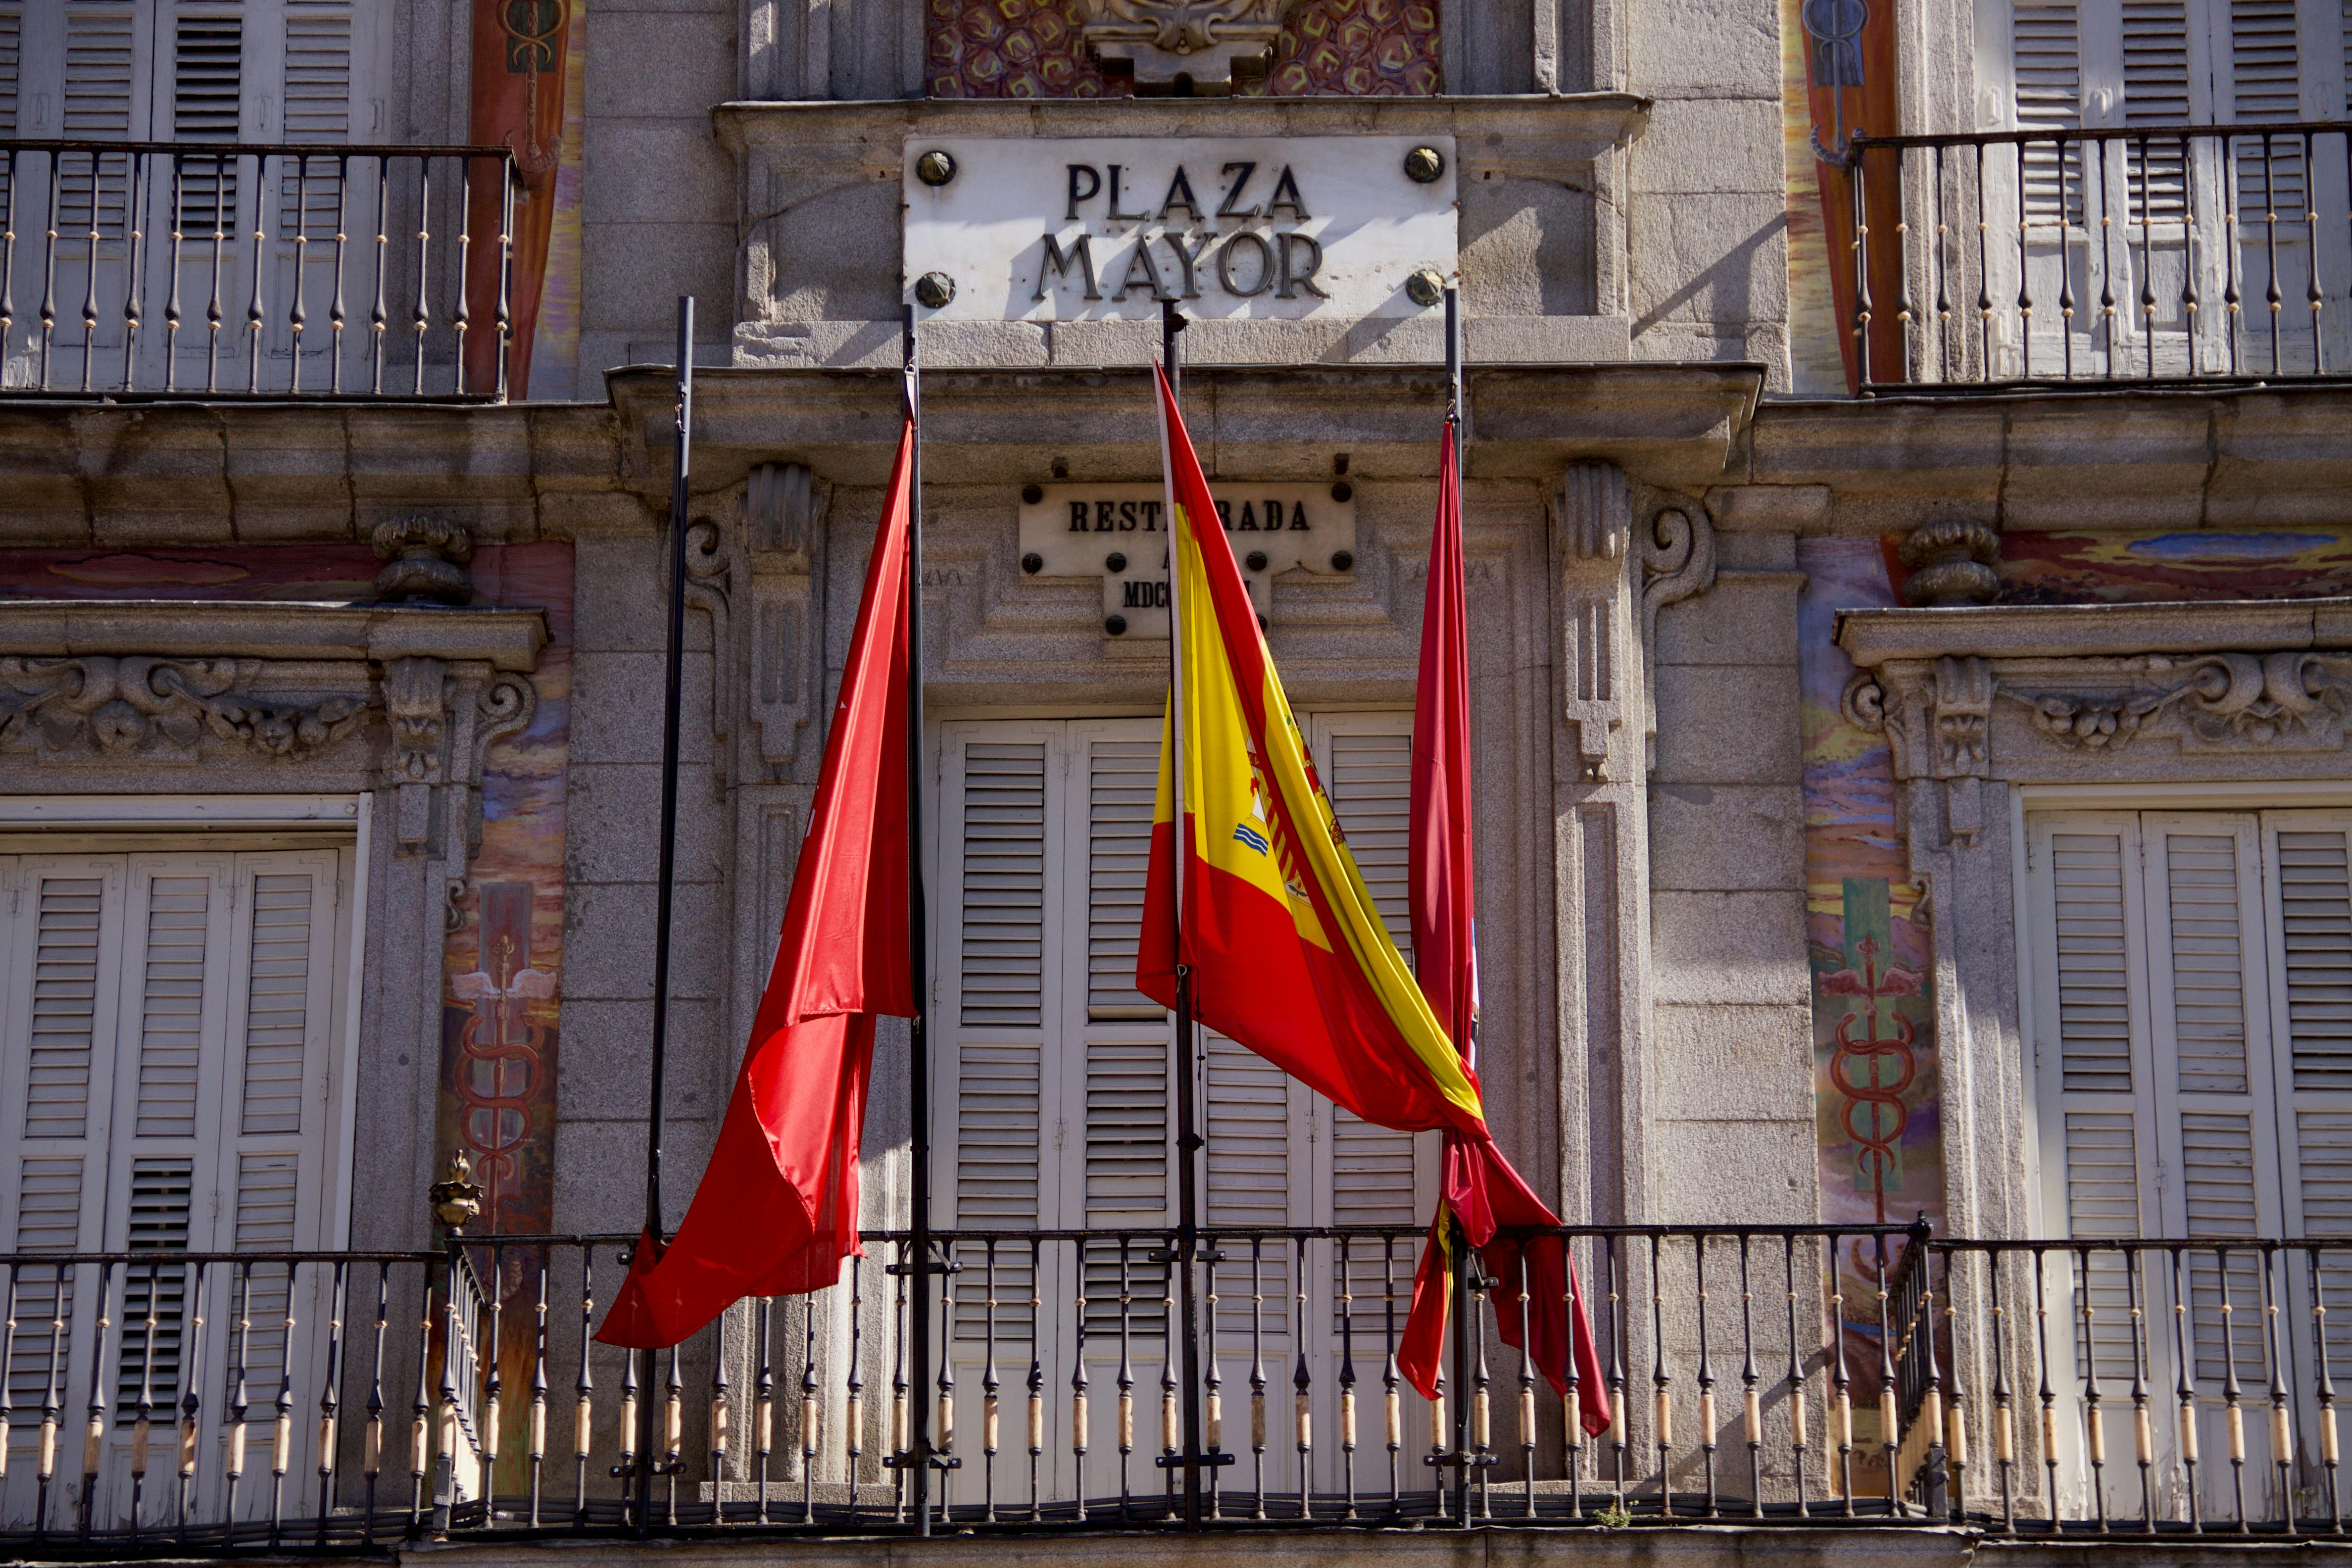 flags at the centro de turismo plaza mayor